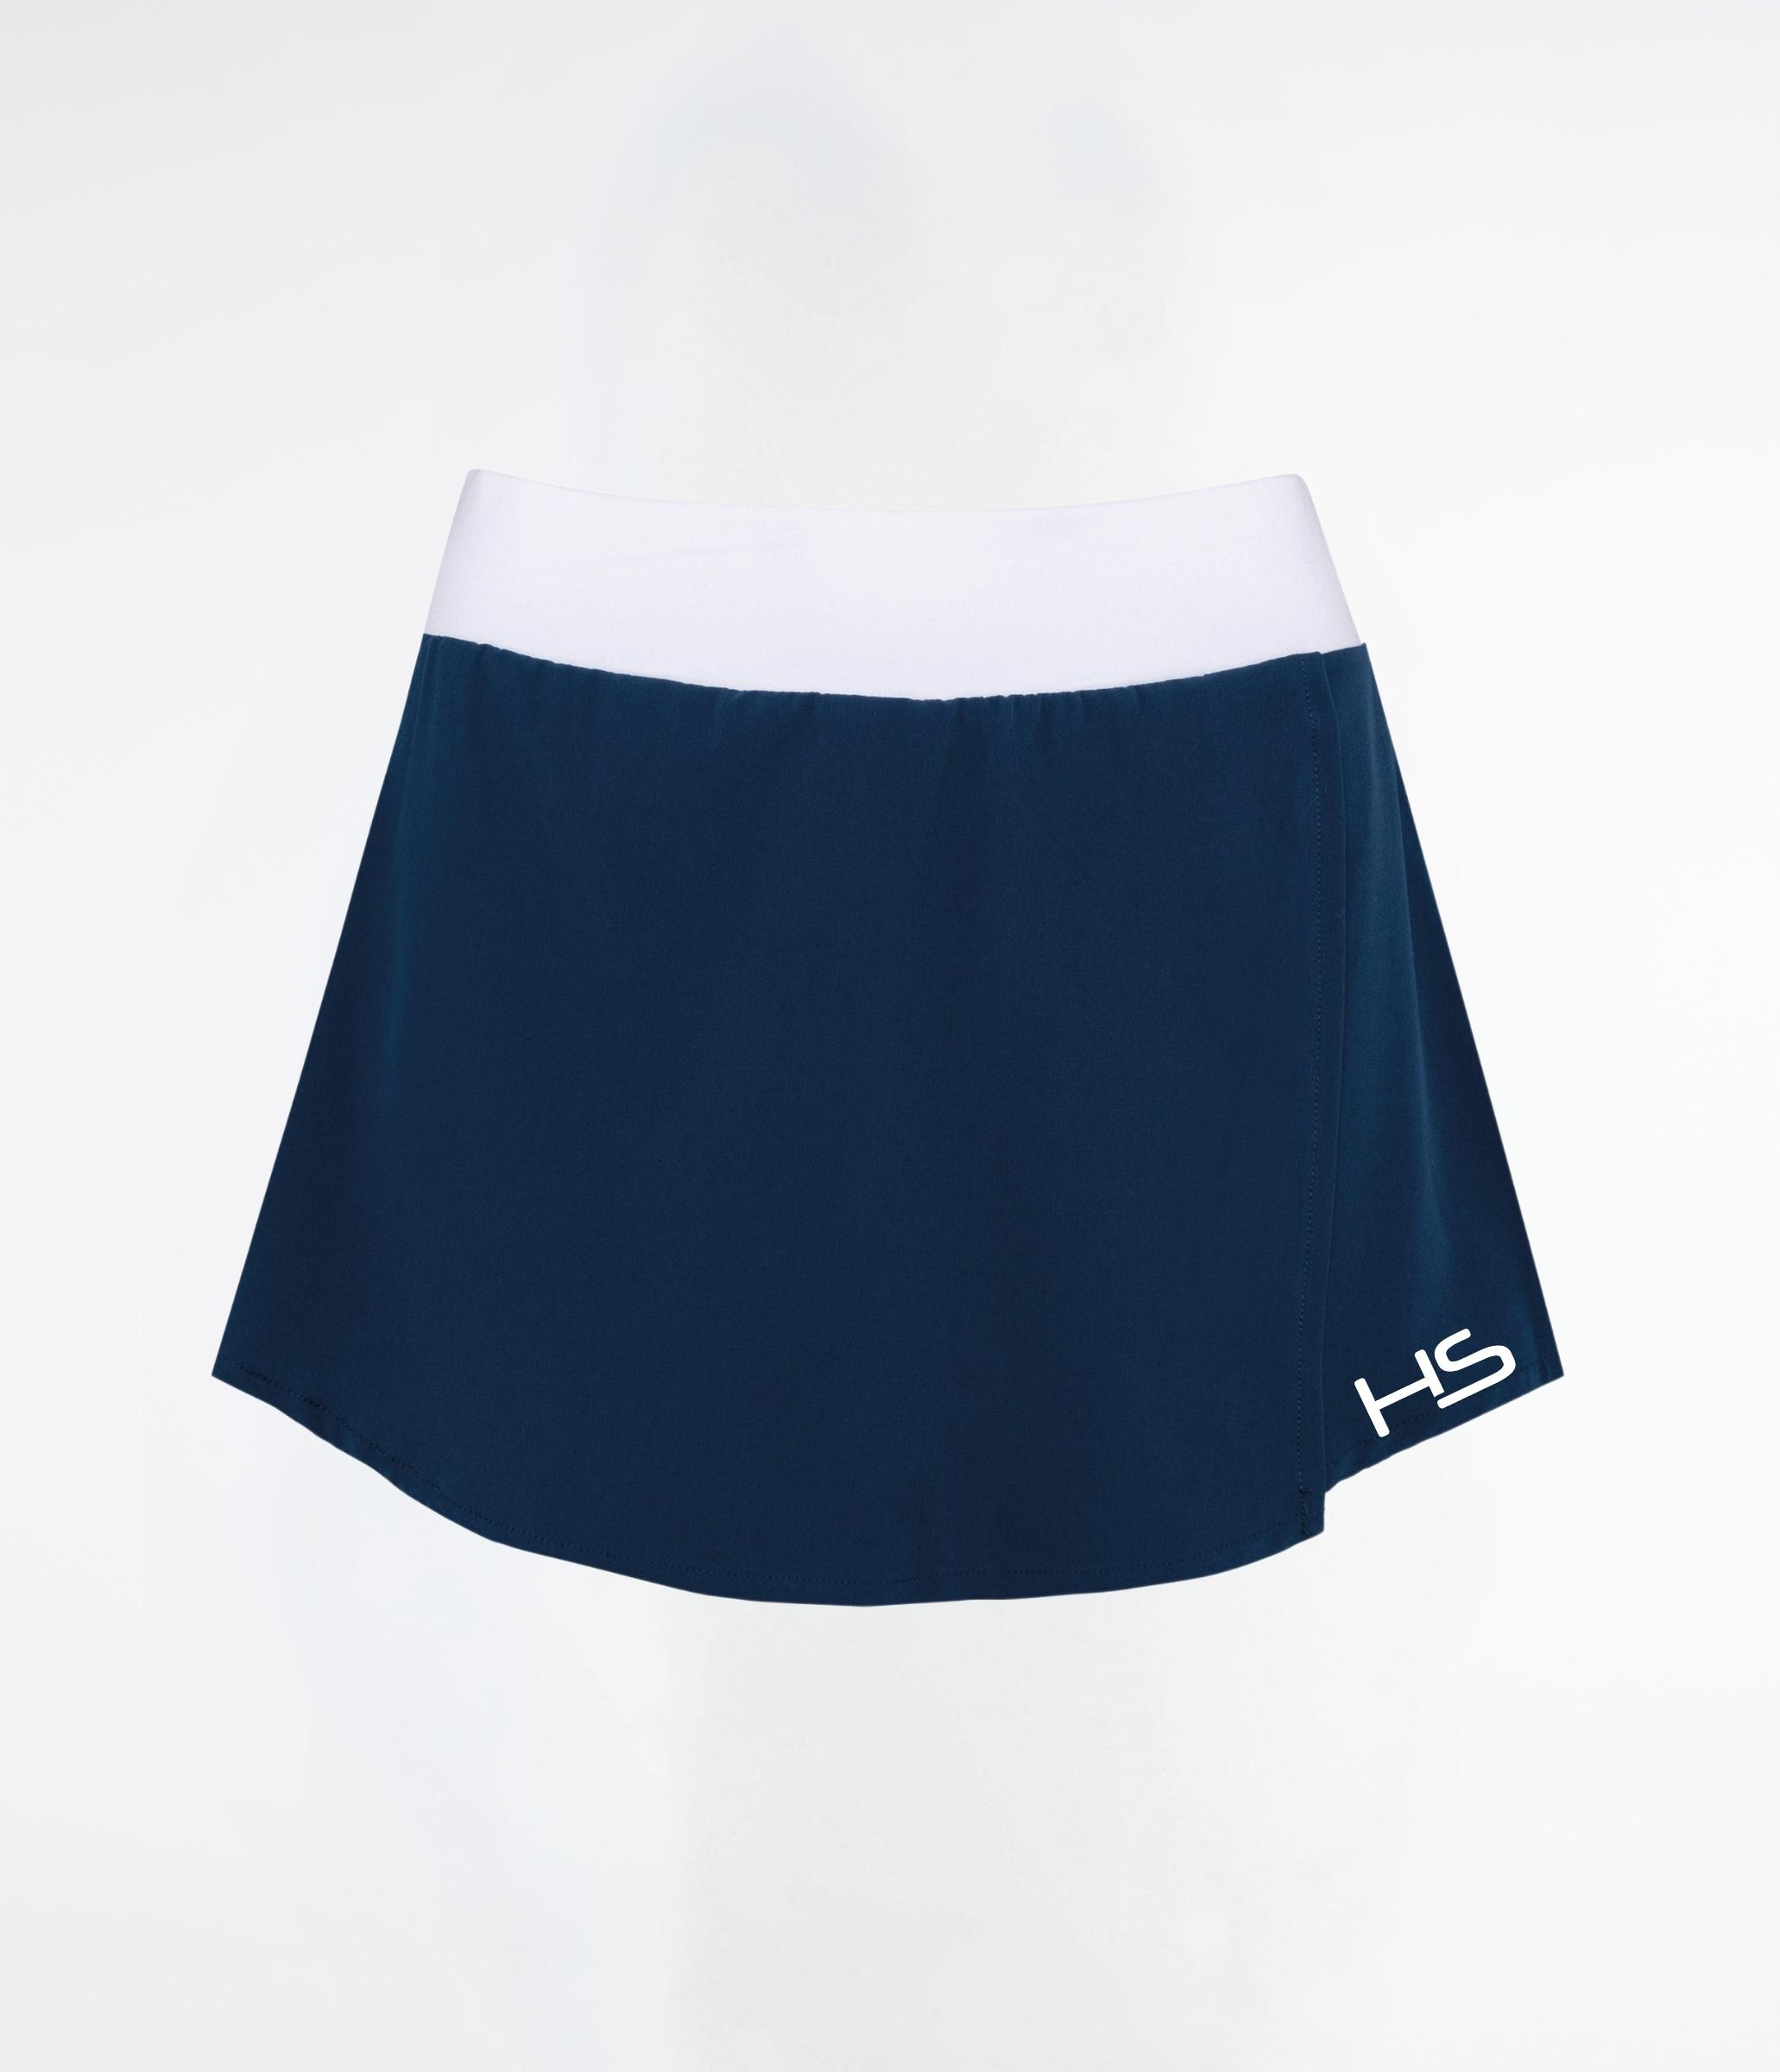 Gonna con shorts tennis/padel navy/white